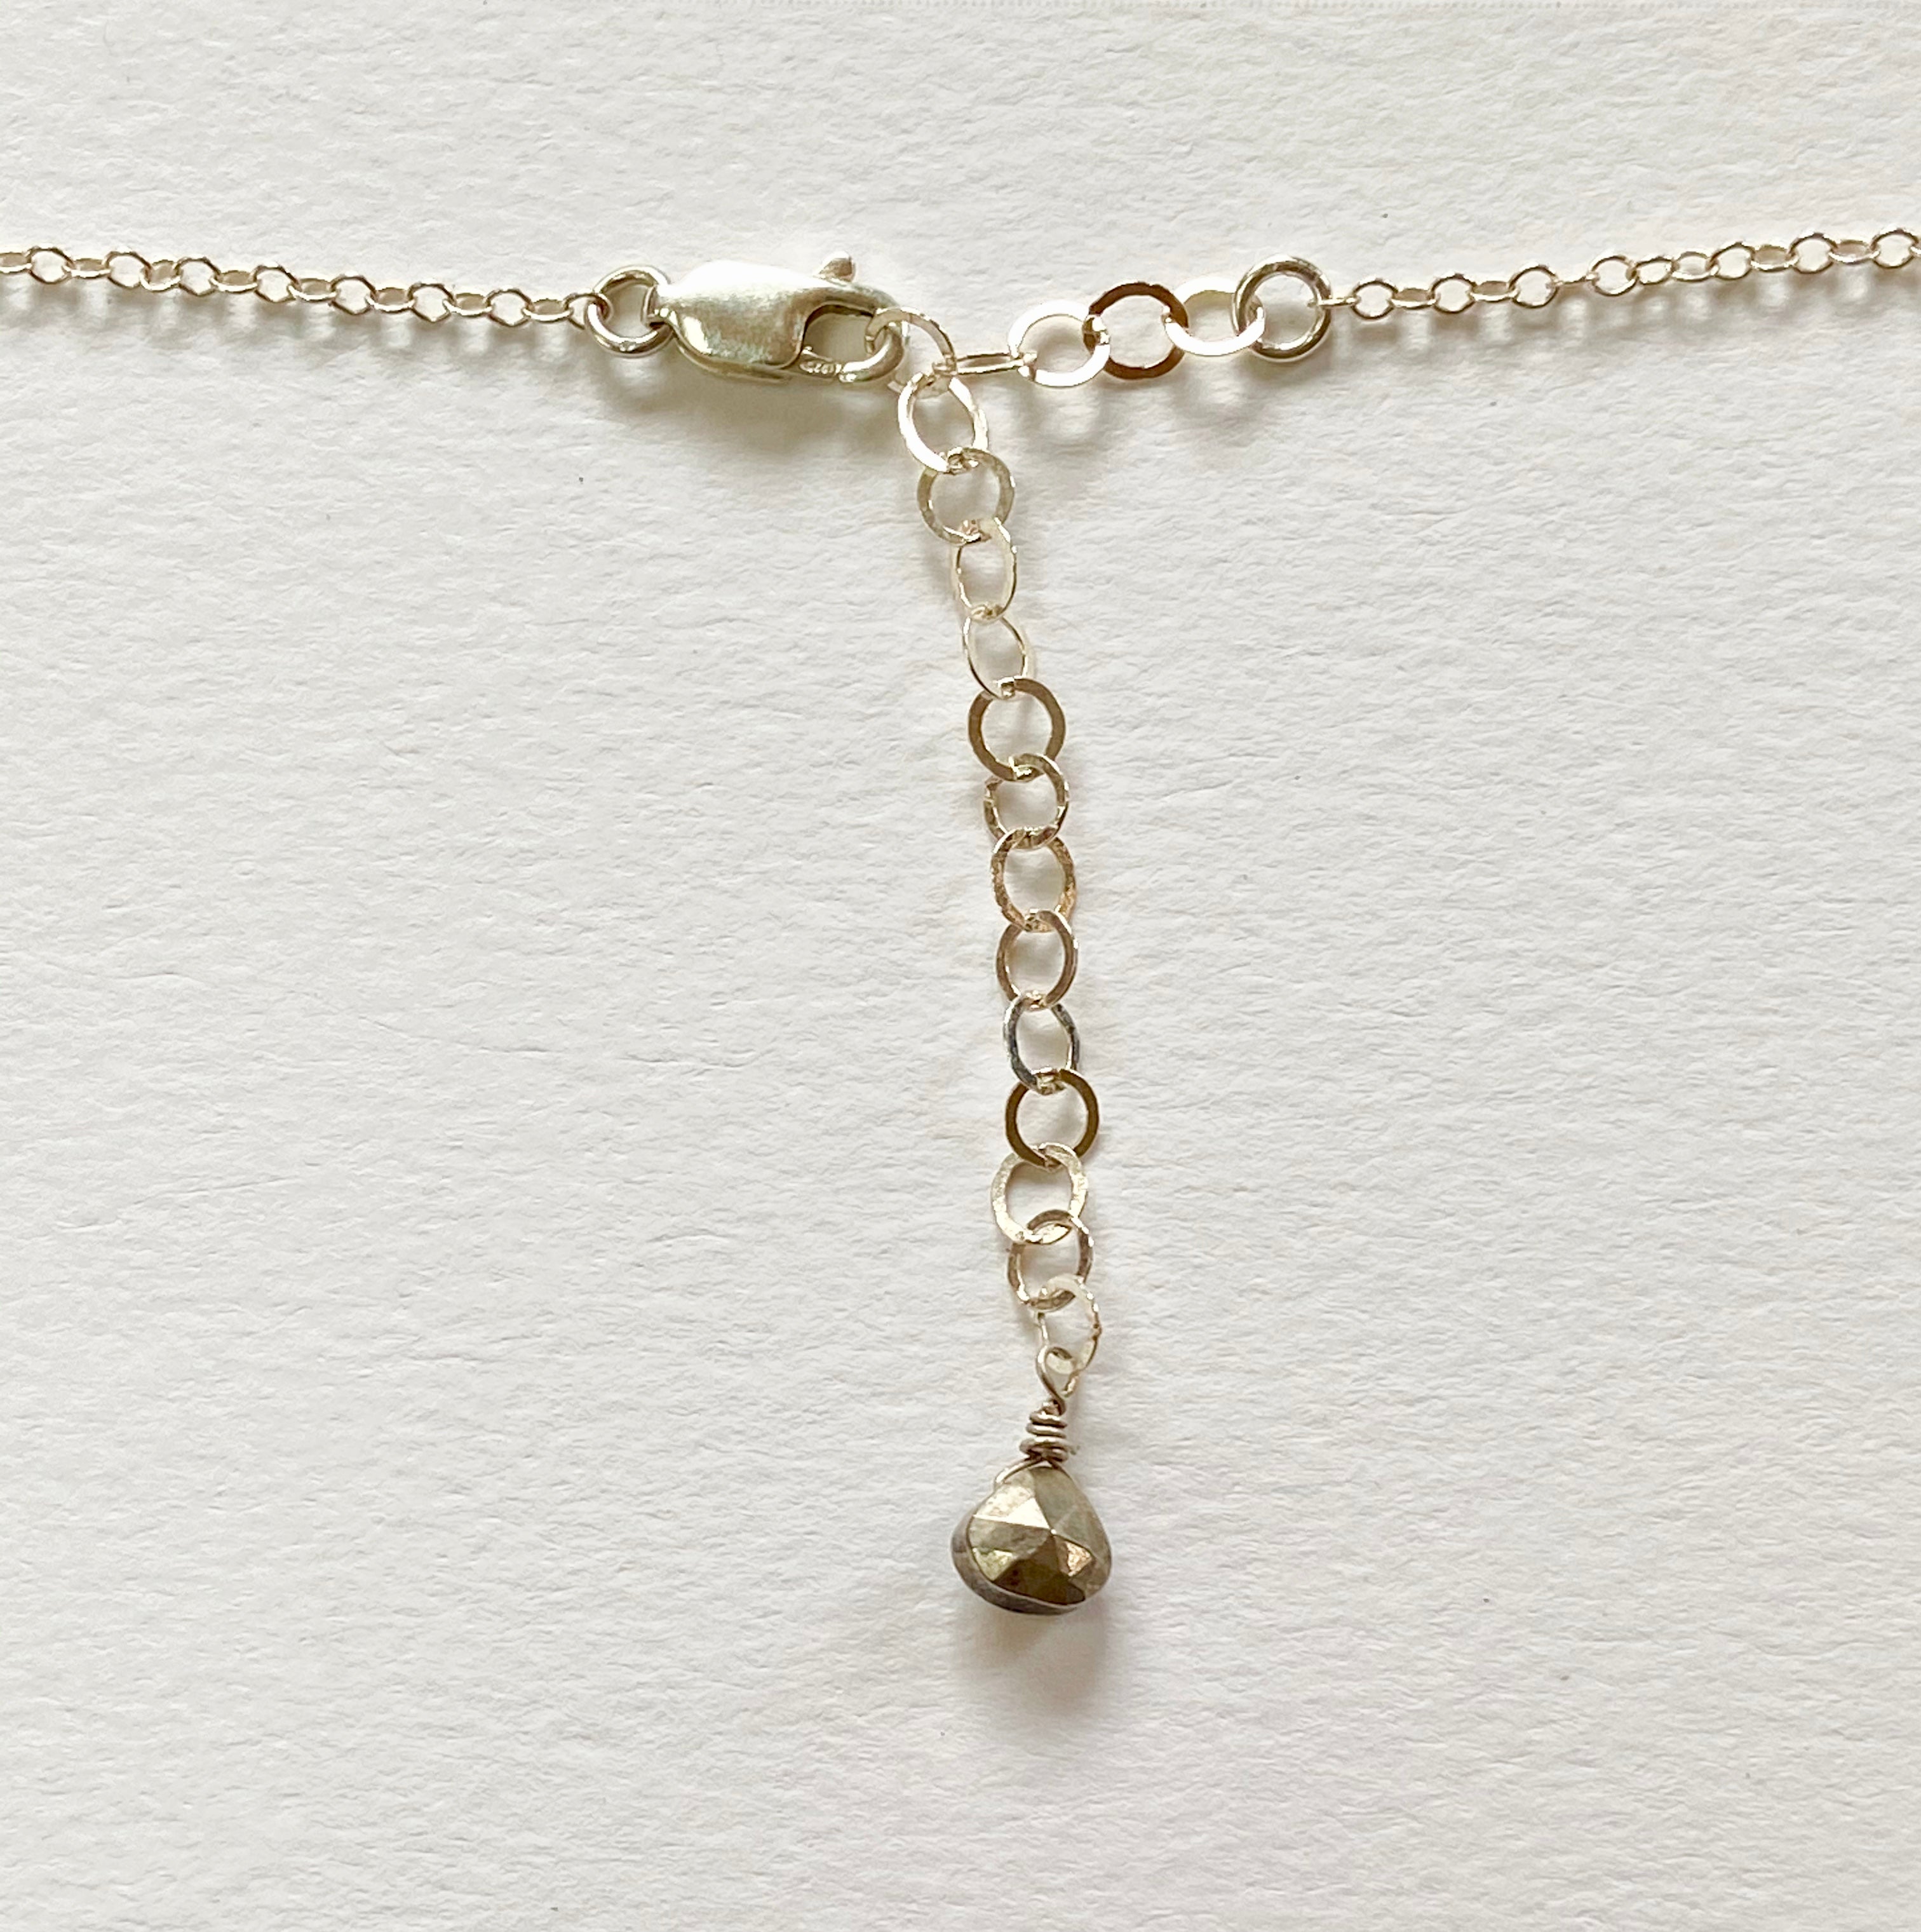 Star Crescent Necklace with Hanging Quartz